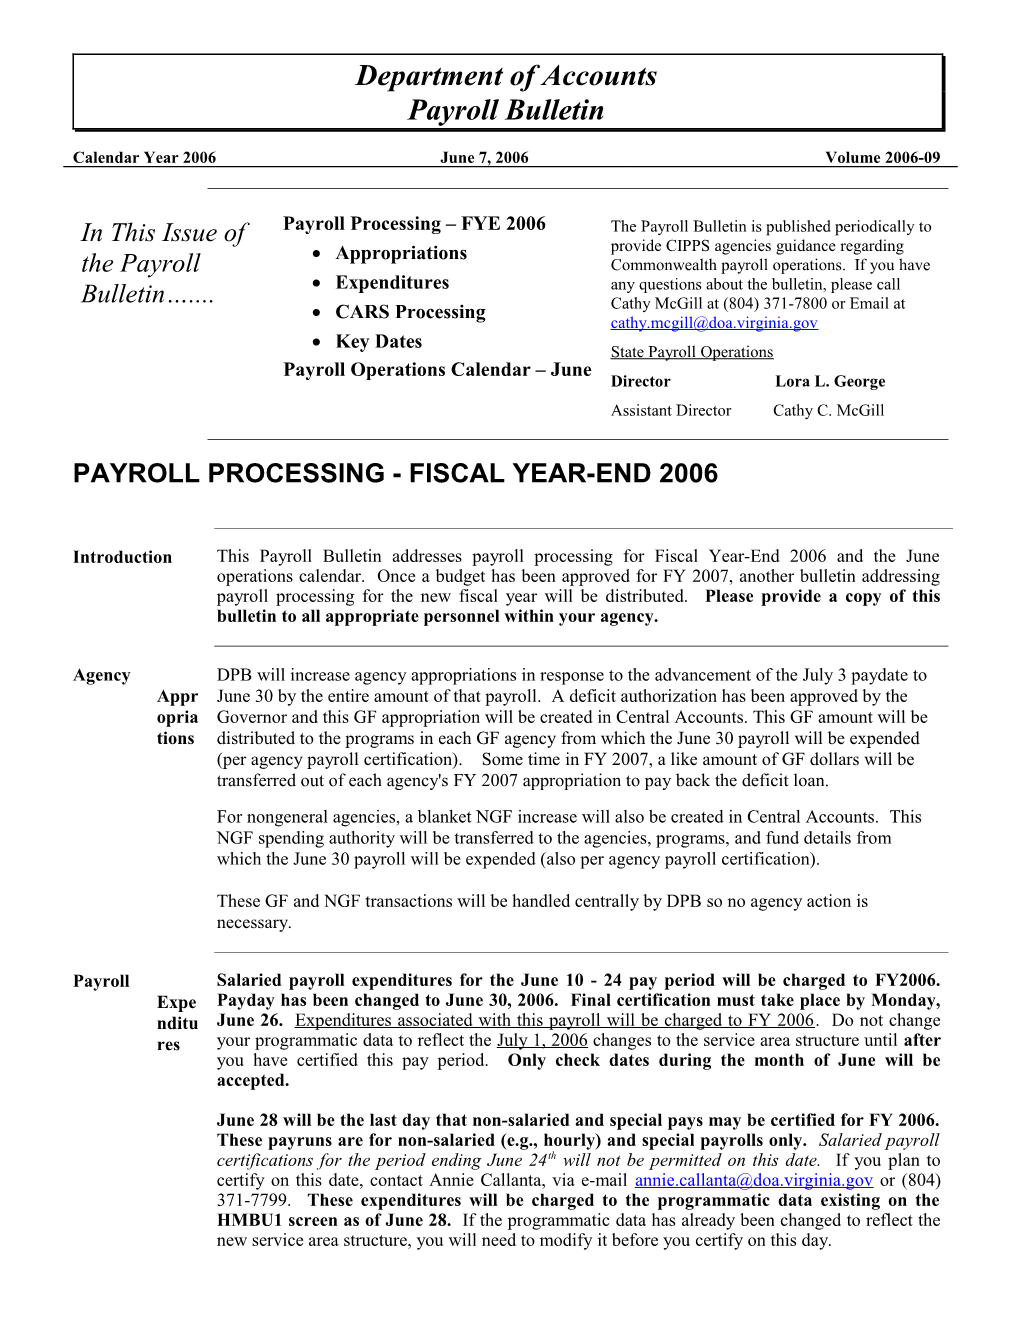 Payroll Bulletin, Volume 2006-09